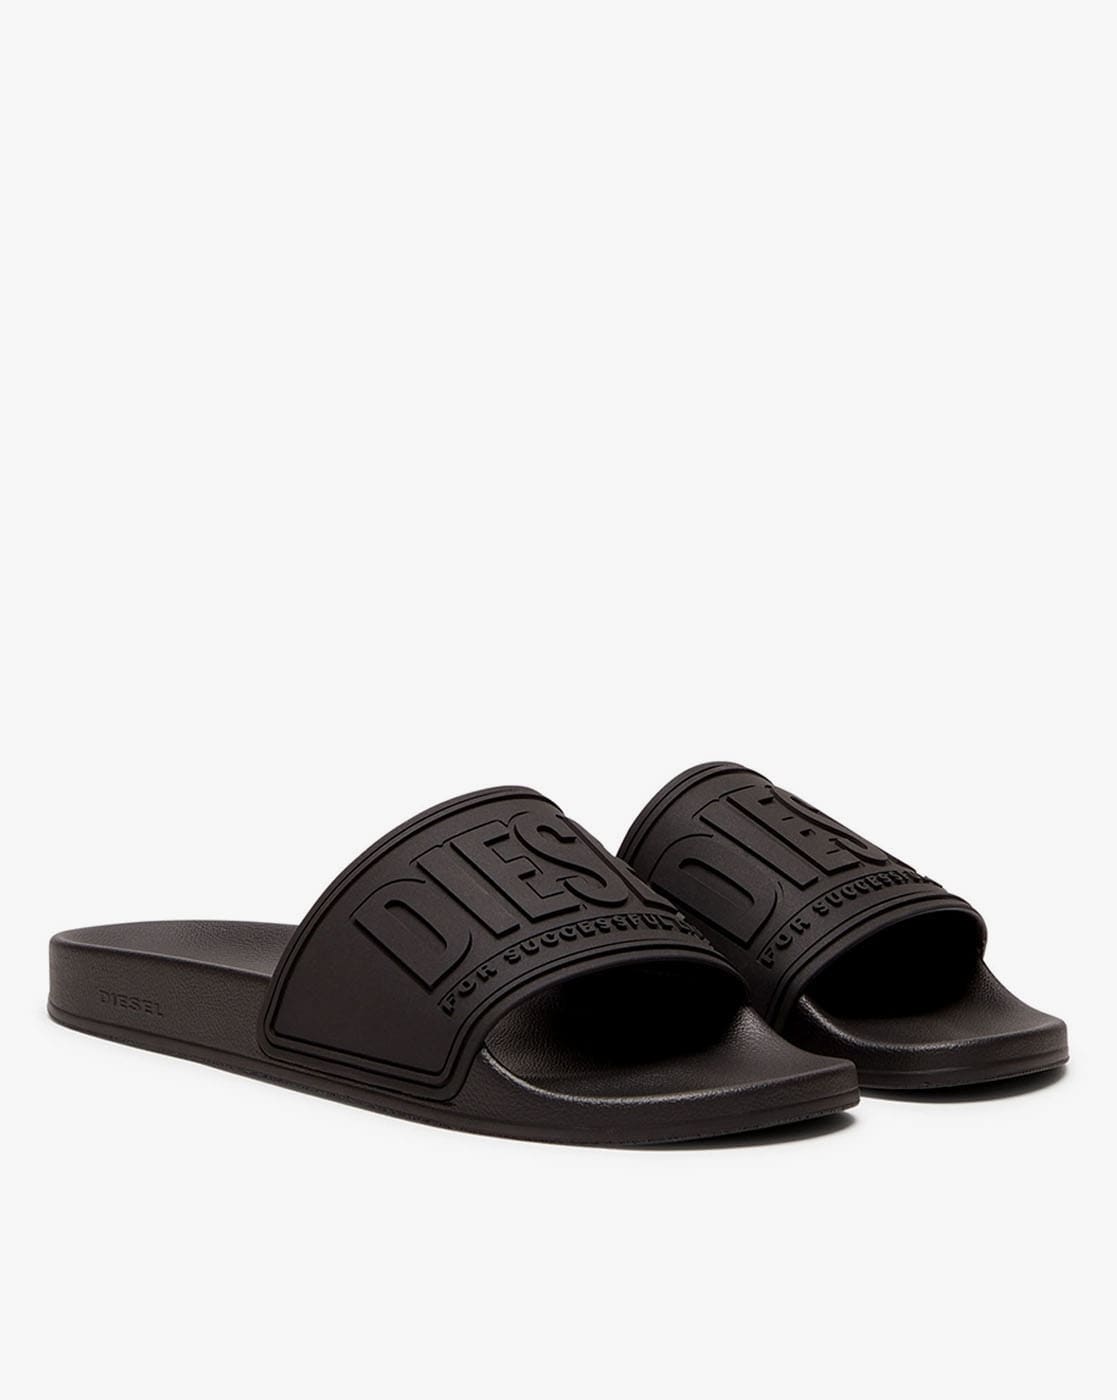 Mens Sandals Casual Beach Walking Beach Summer Slipper Fashion Flip Flop  Size | eBay